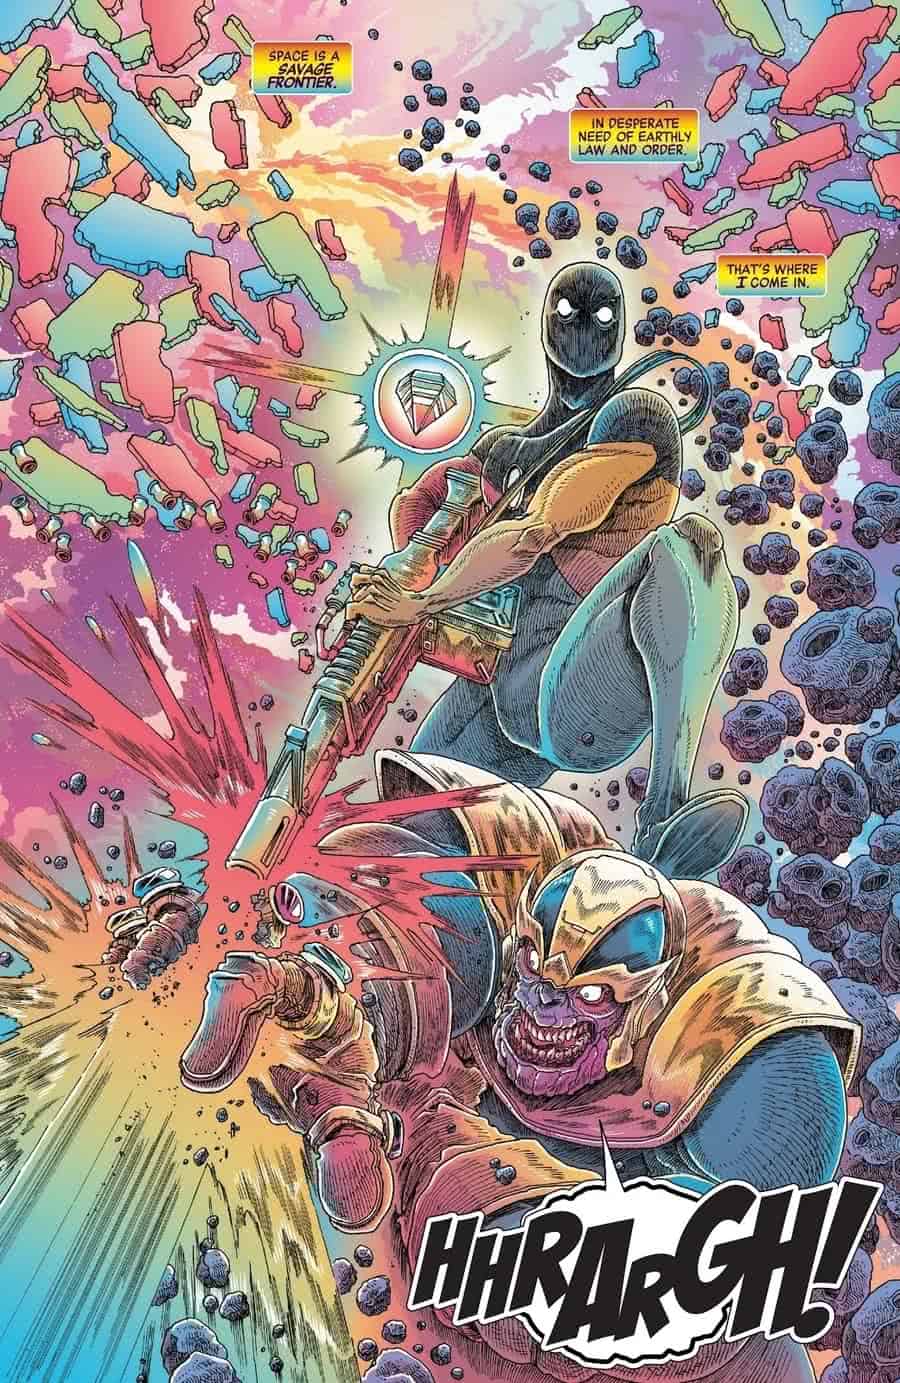 Heroes Reborn #4 (Marvel Comics)